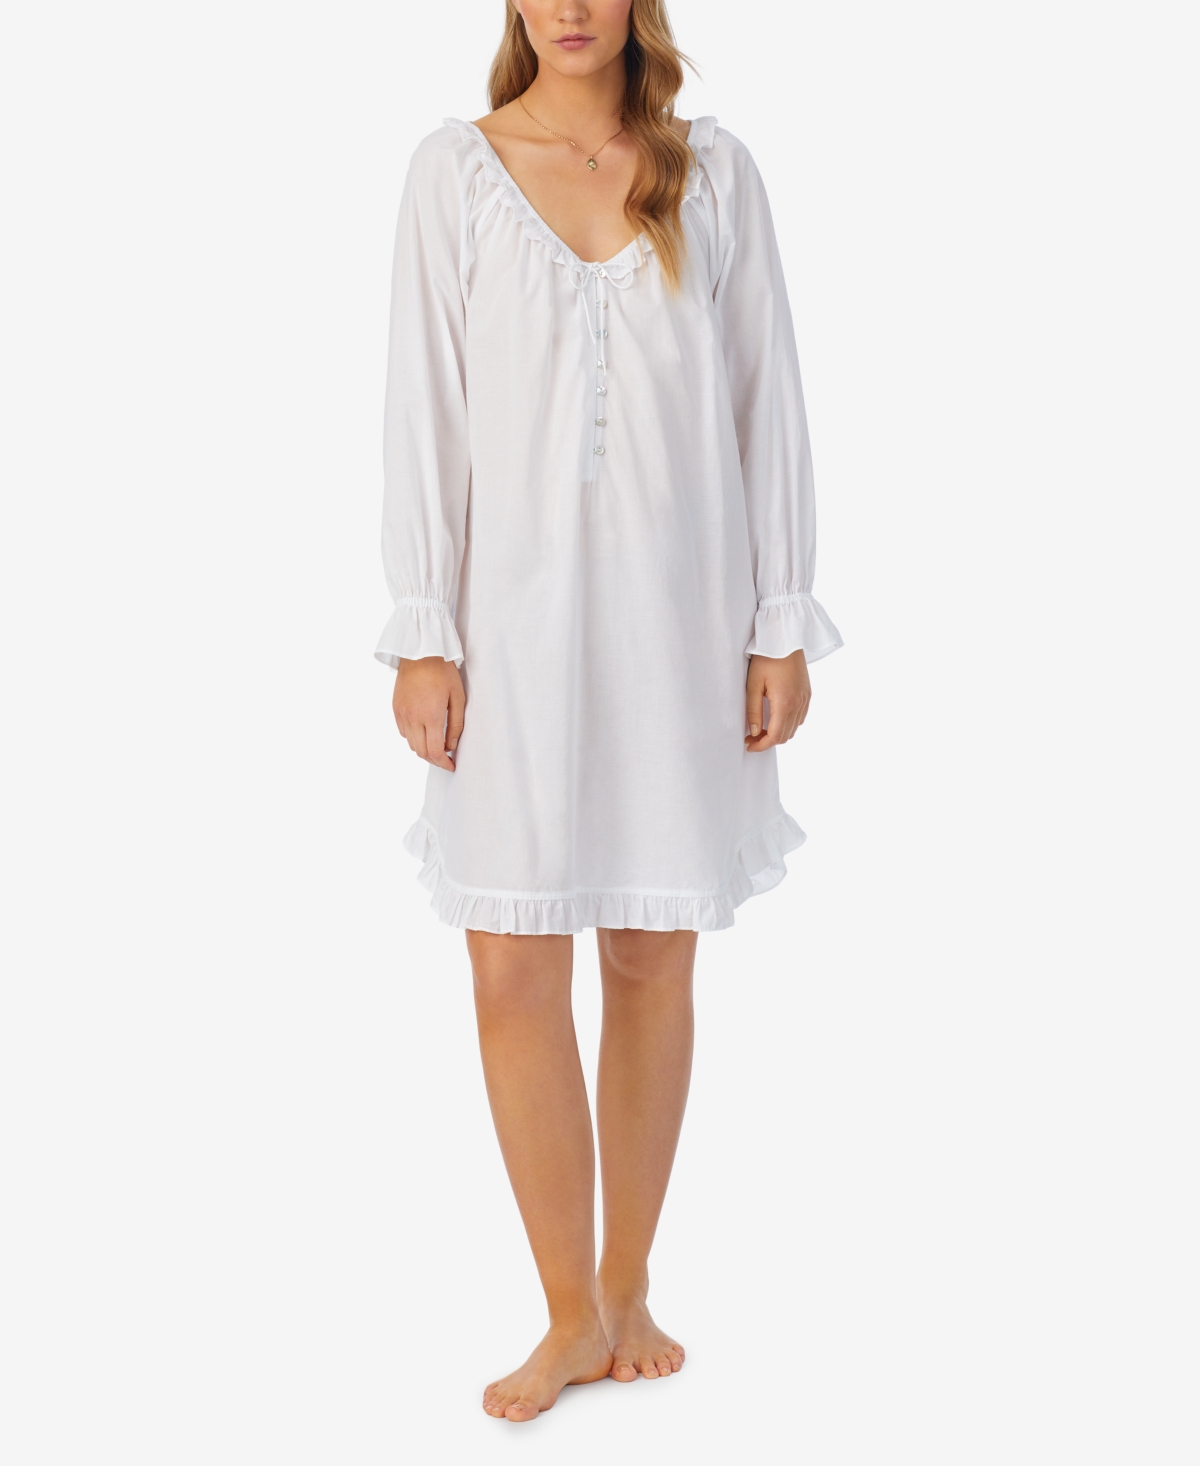 1950s Sleepwear, Loungewear History and Shopping Guide Eileen West Womens Cotton Long Sleeve Sleepshirt Nightgown $70.00 AT vintagedancer.com